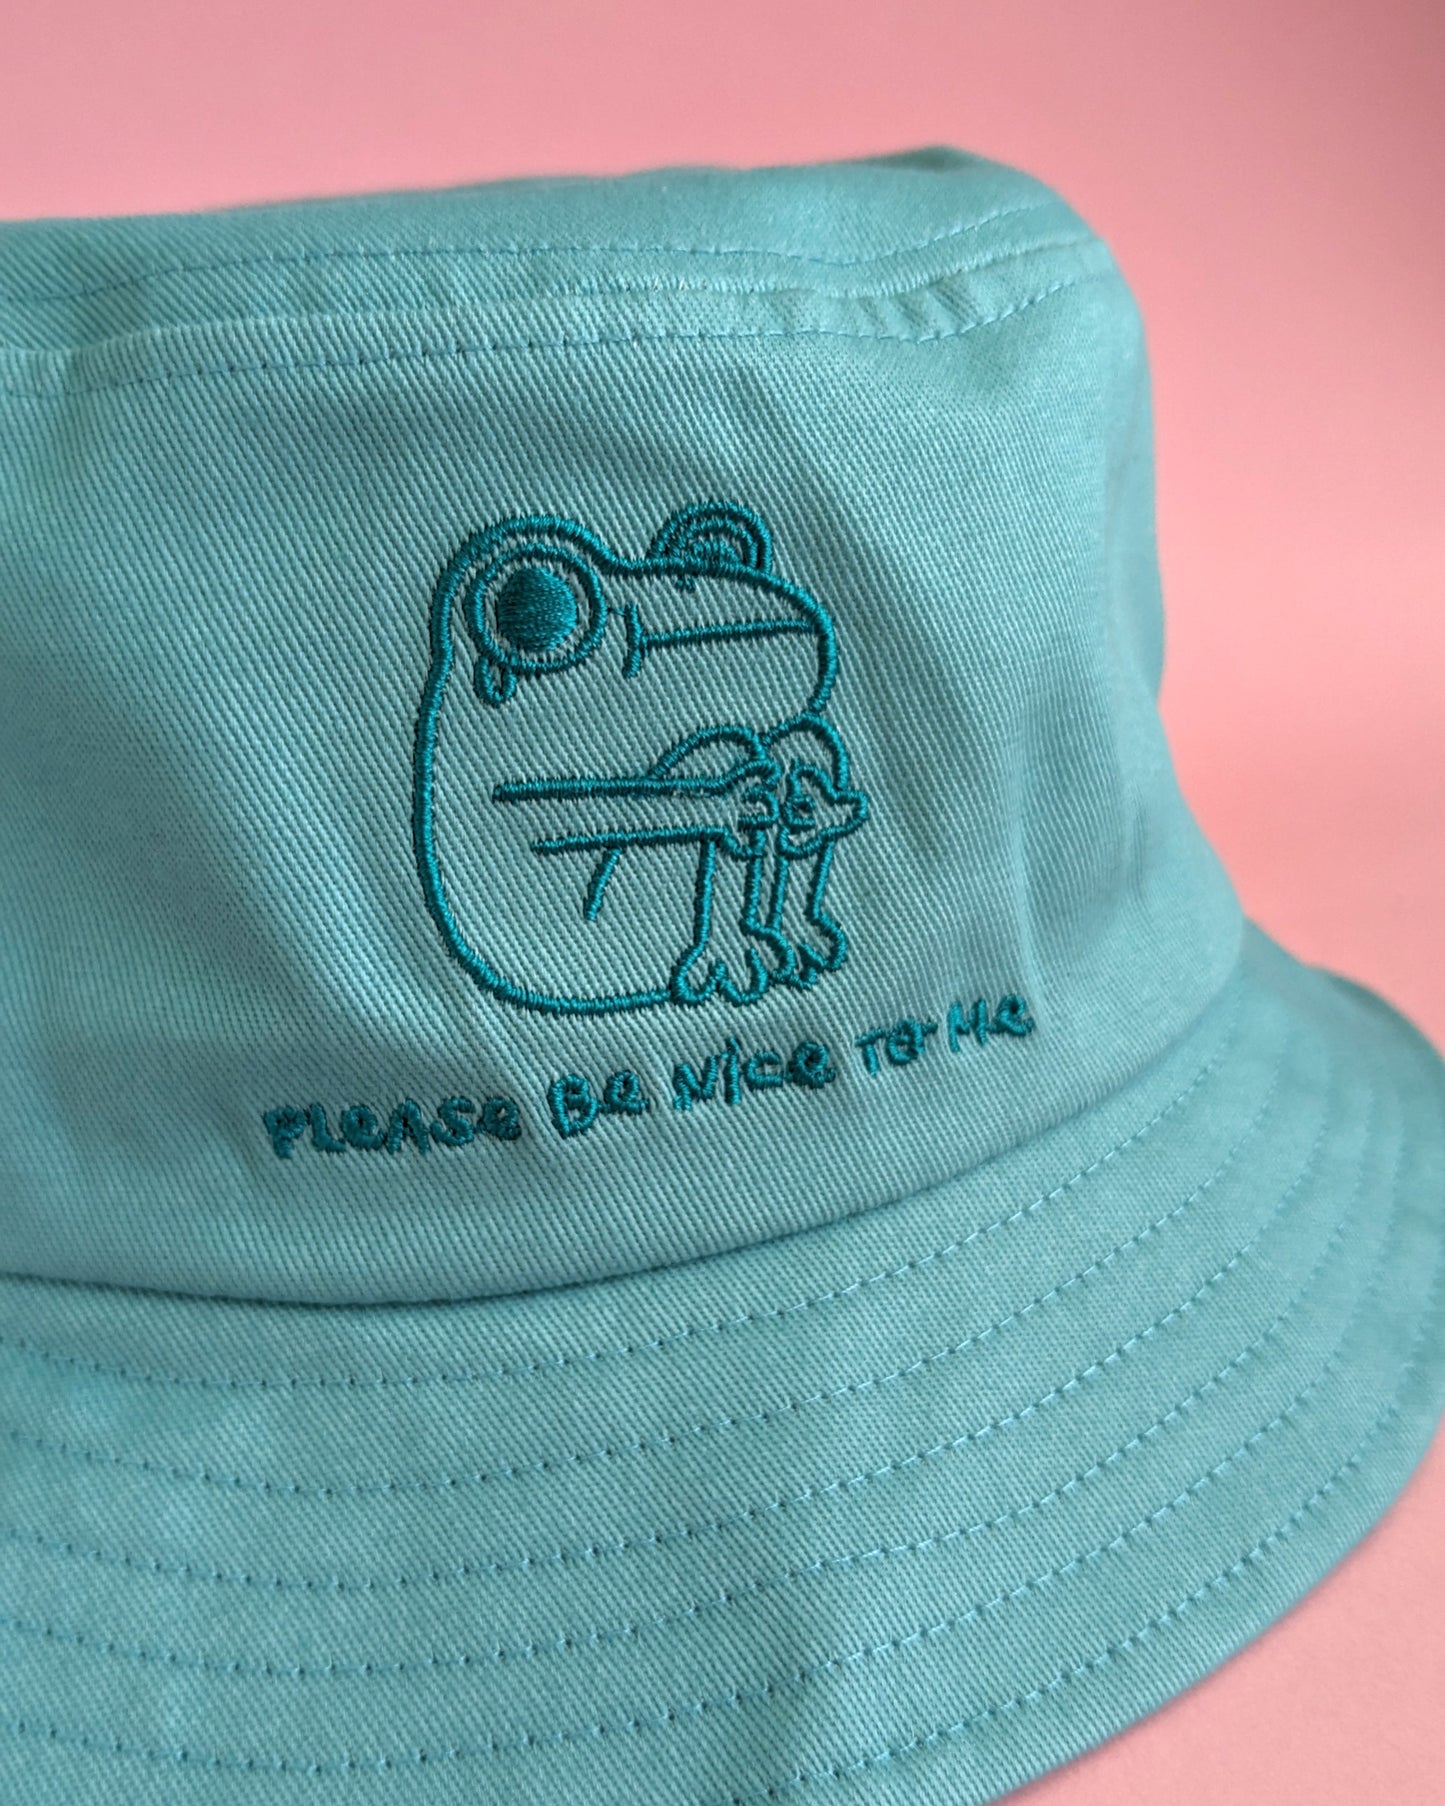 Please be Nice to Me - Teal Bucket Hat